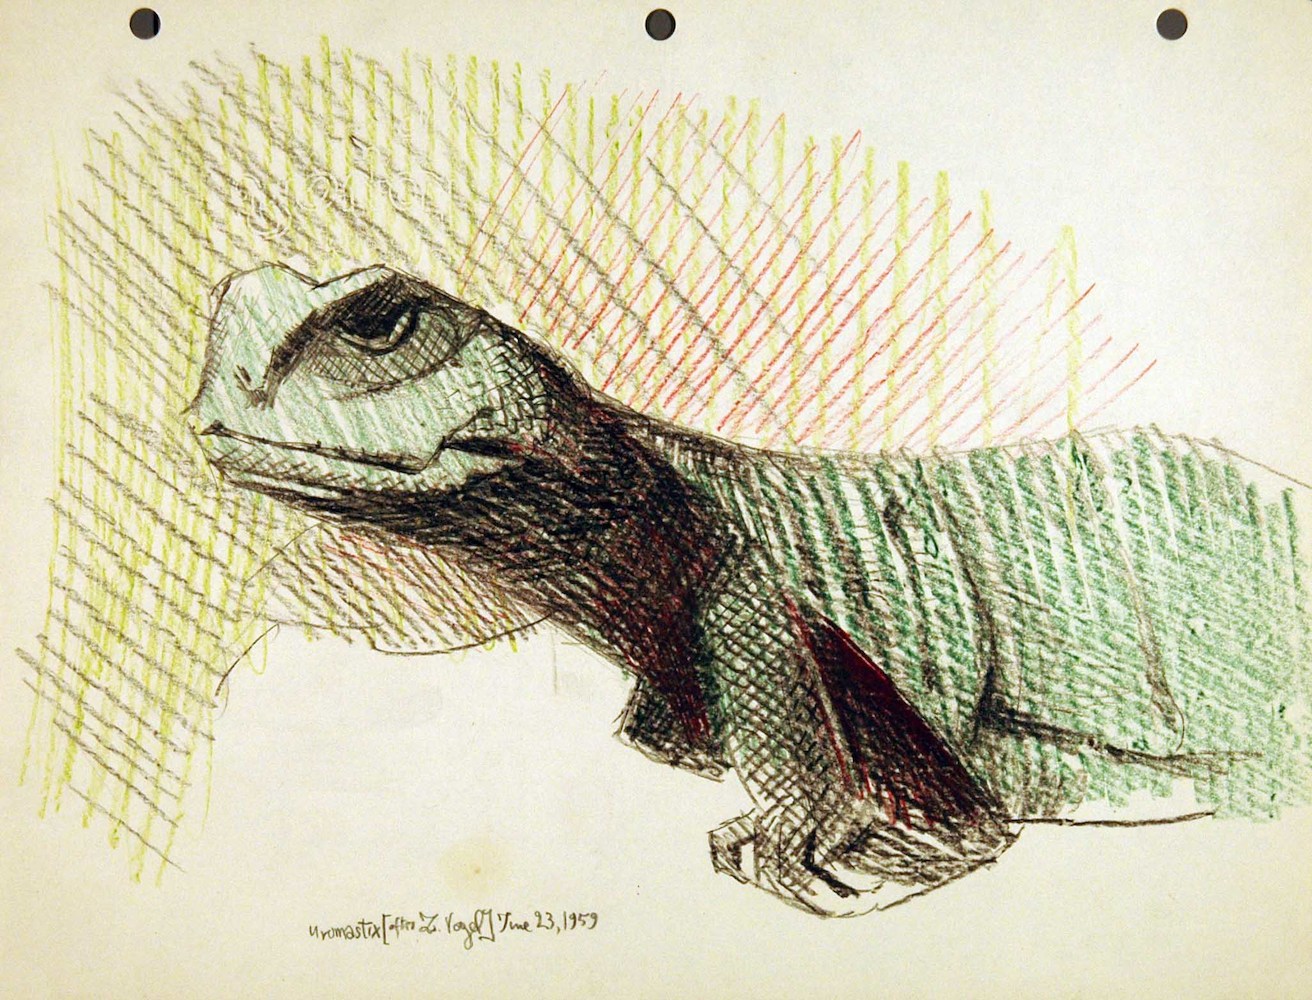 Reptiles. Uromastix, after Z. Vogel